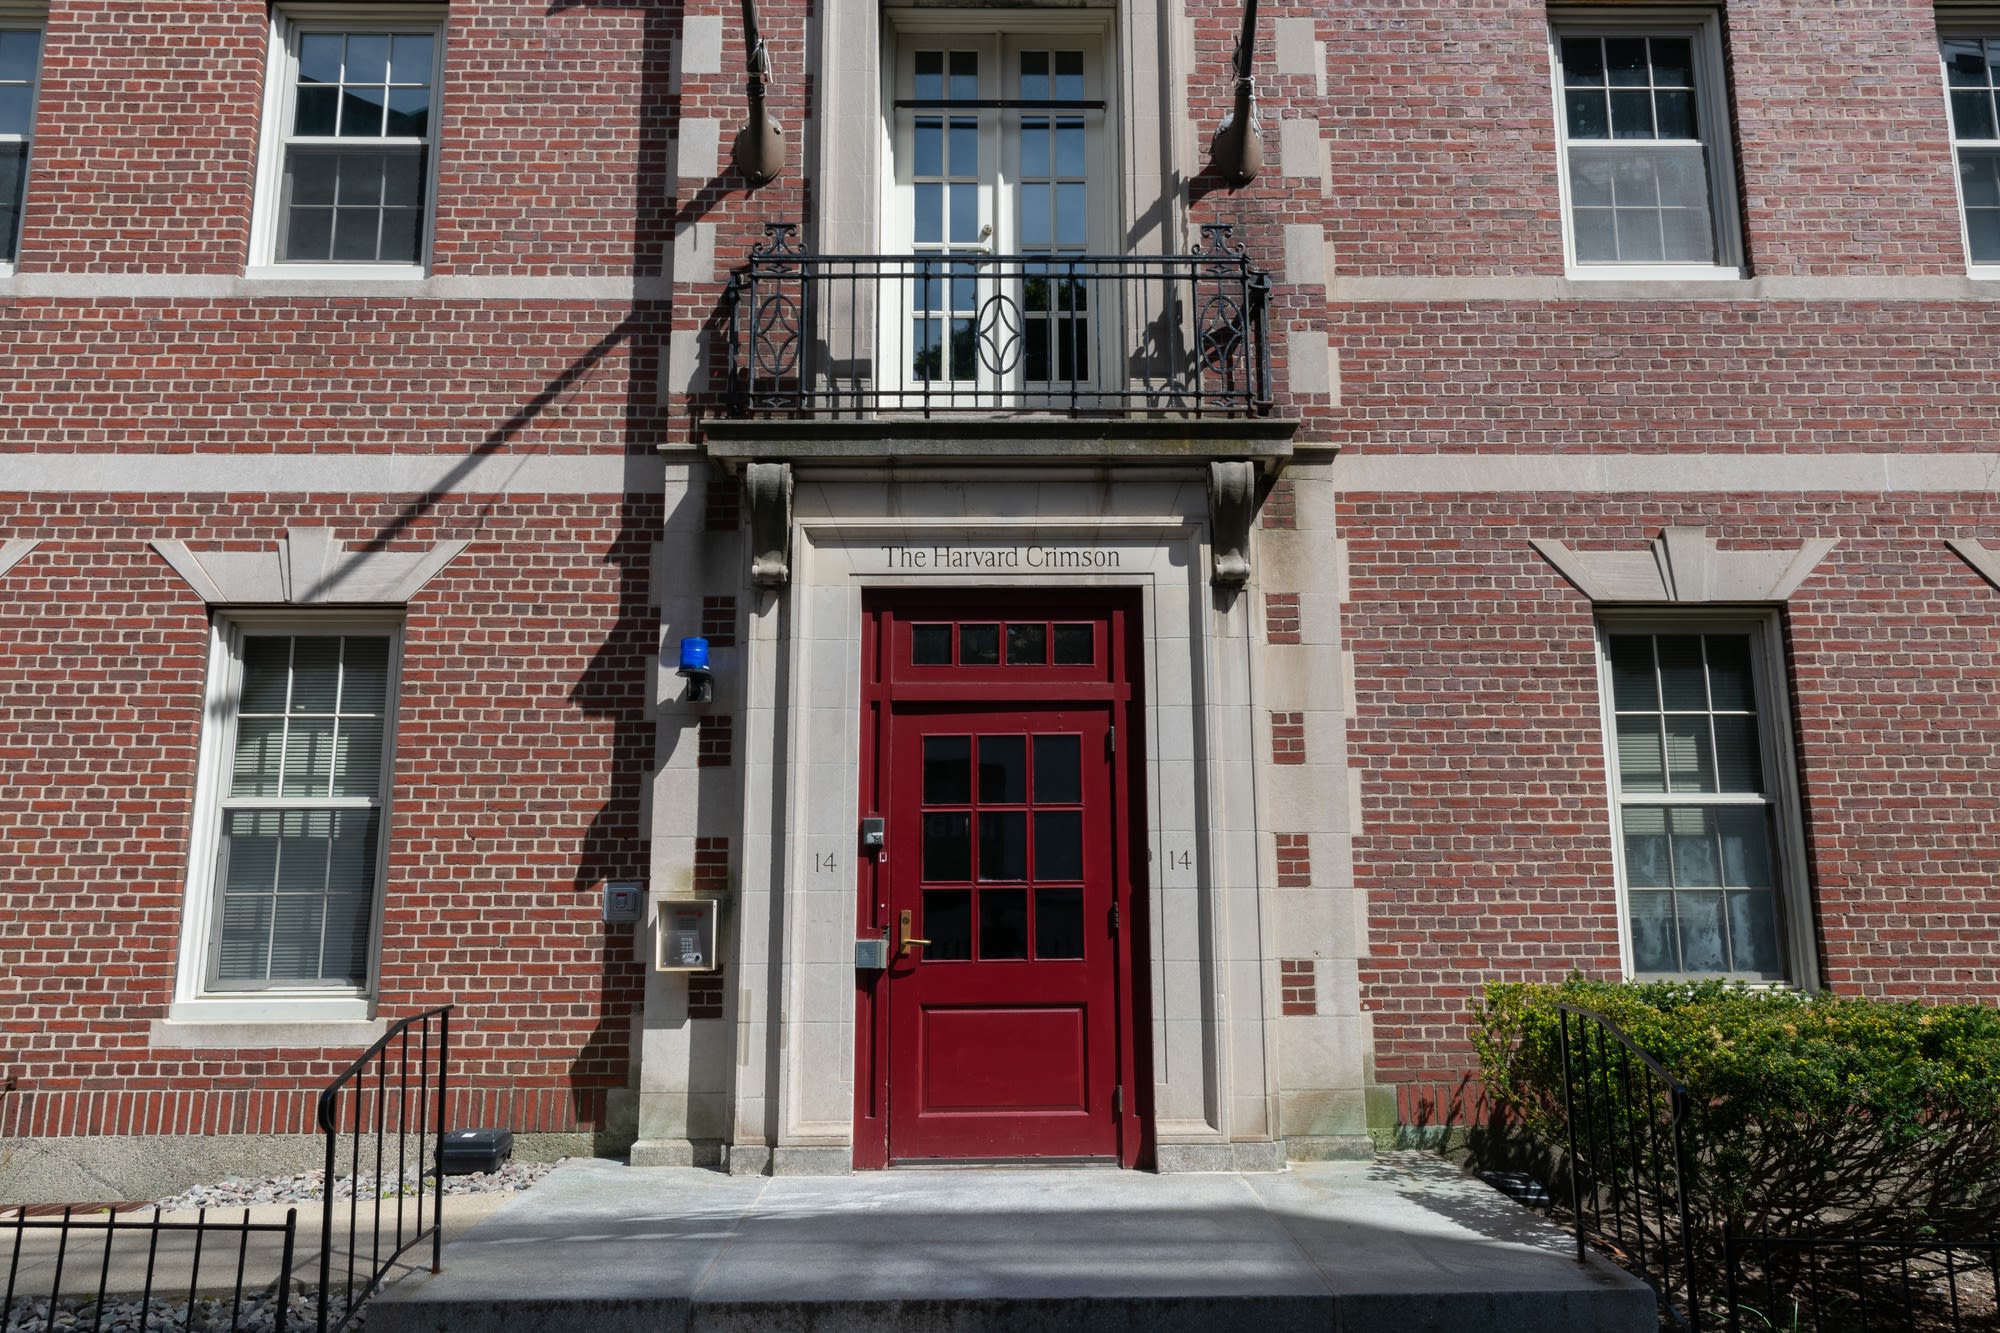 College Apologizes for Sending Involuntary Leave Notice to Harvard Crimson Reporter | News | The Harvard Crimson